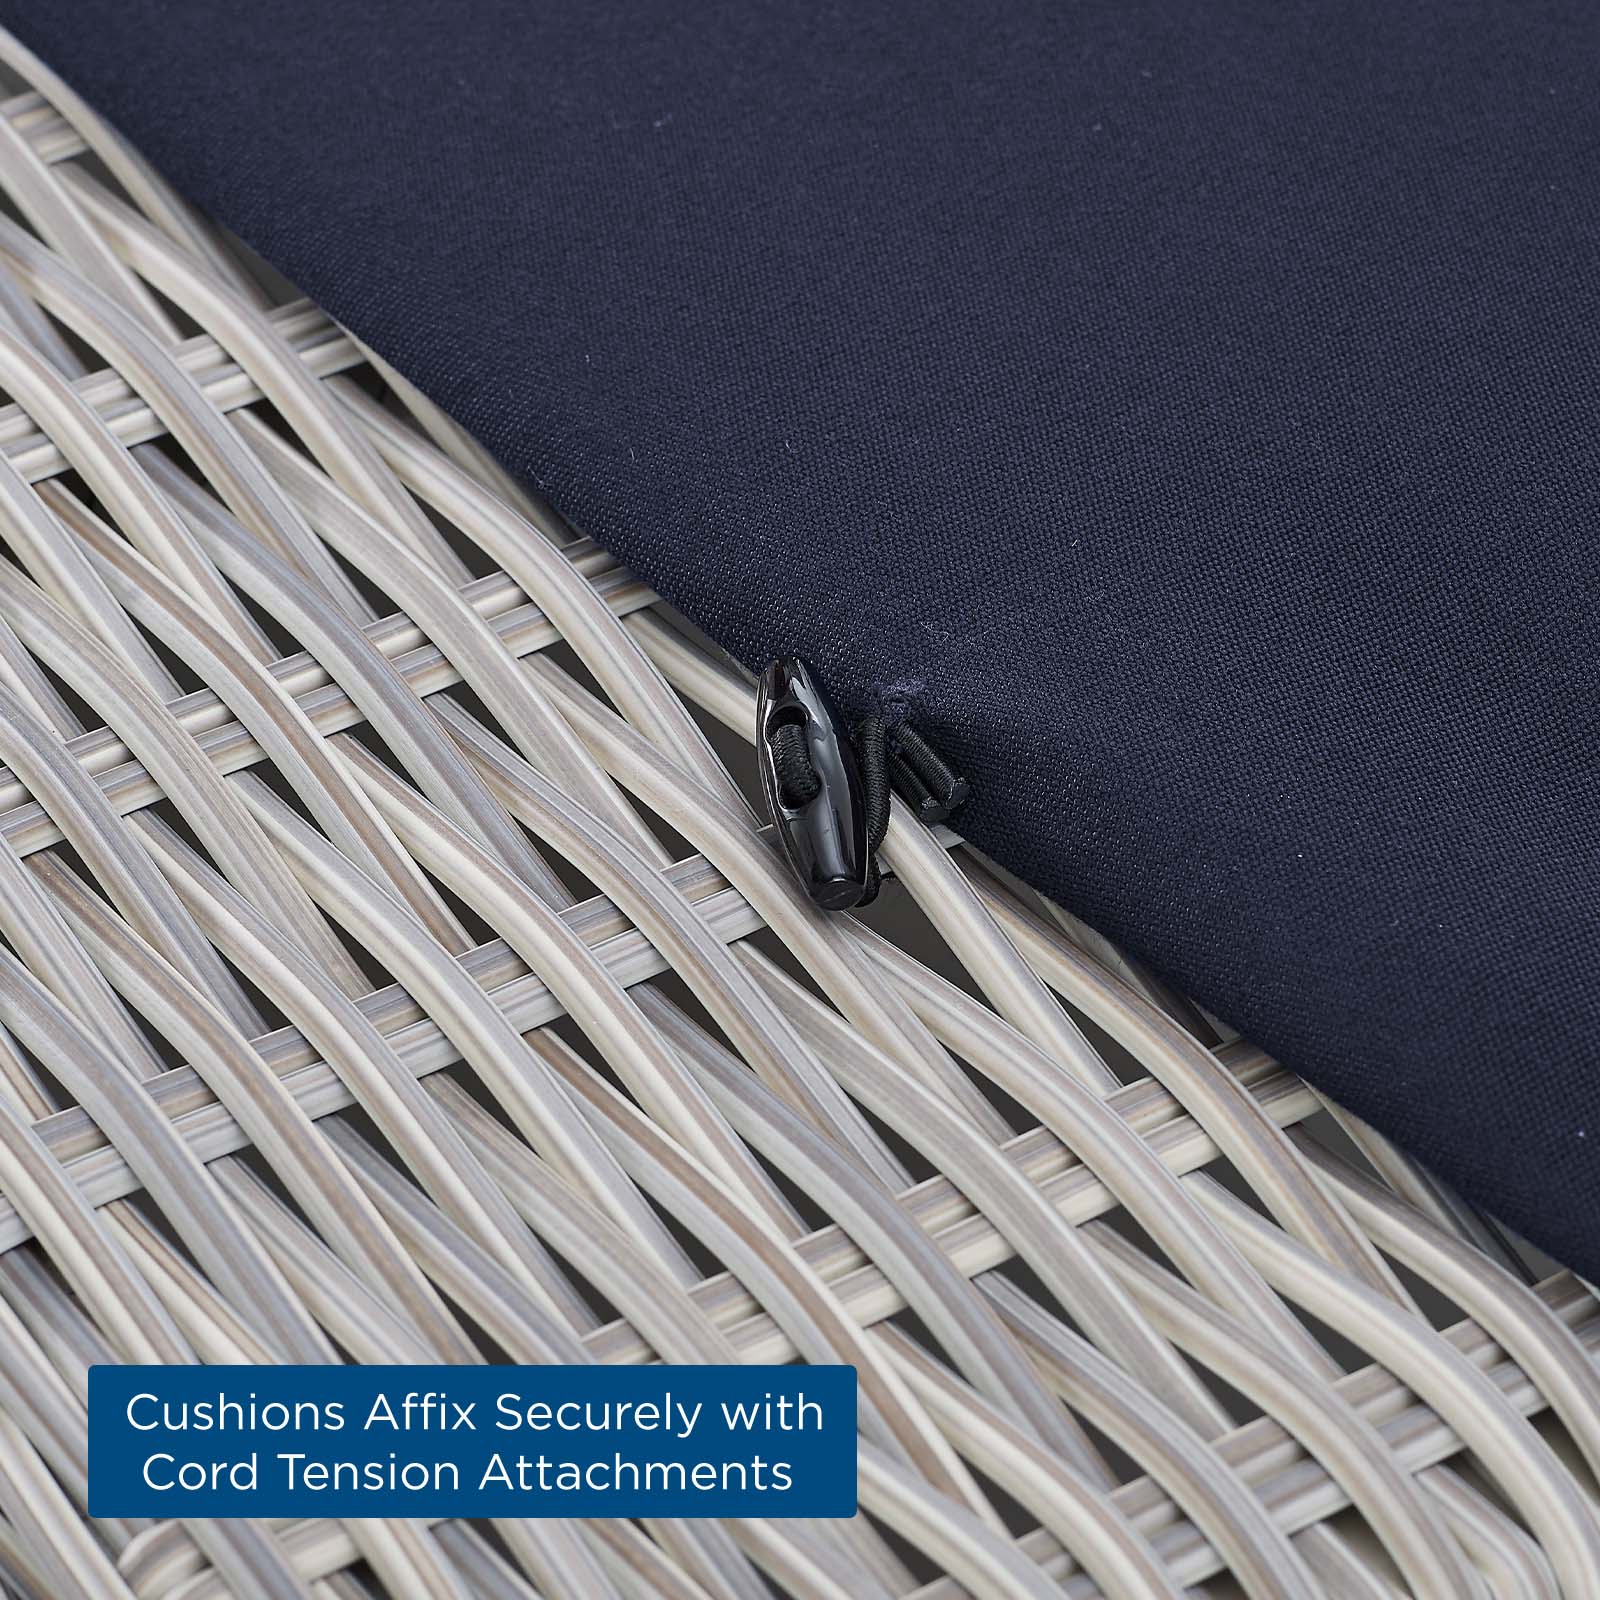 Conway Sunbrella® Outdoor Patio Wicker Rattan Sofa - East Shore Modern Home Furnishings